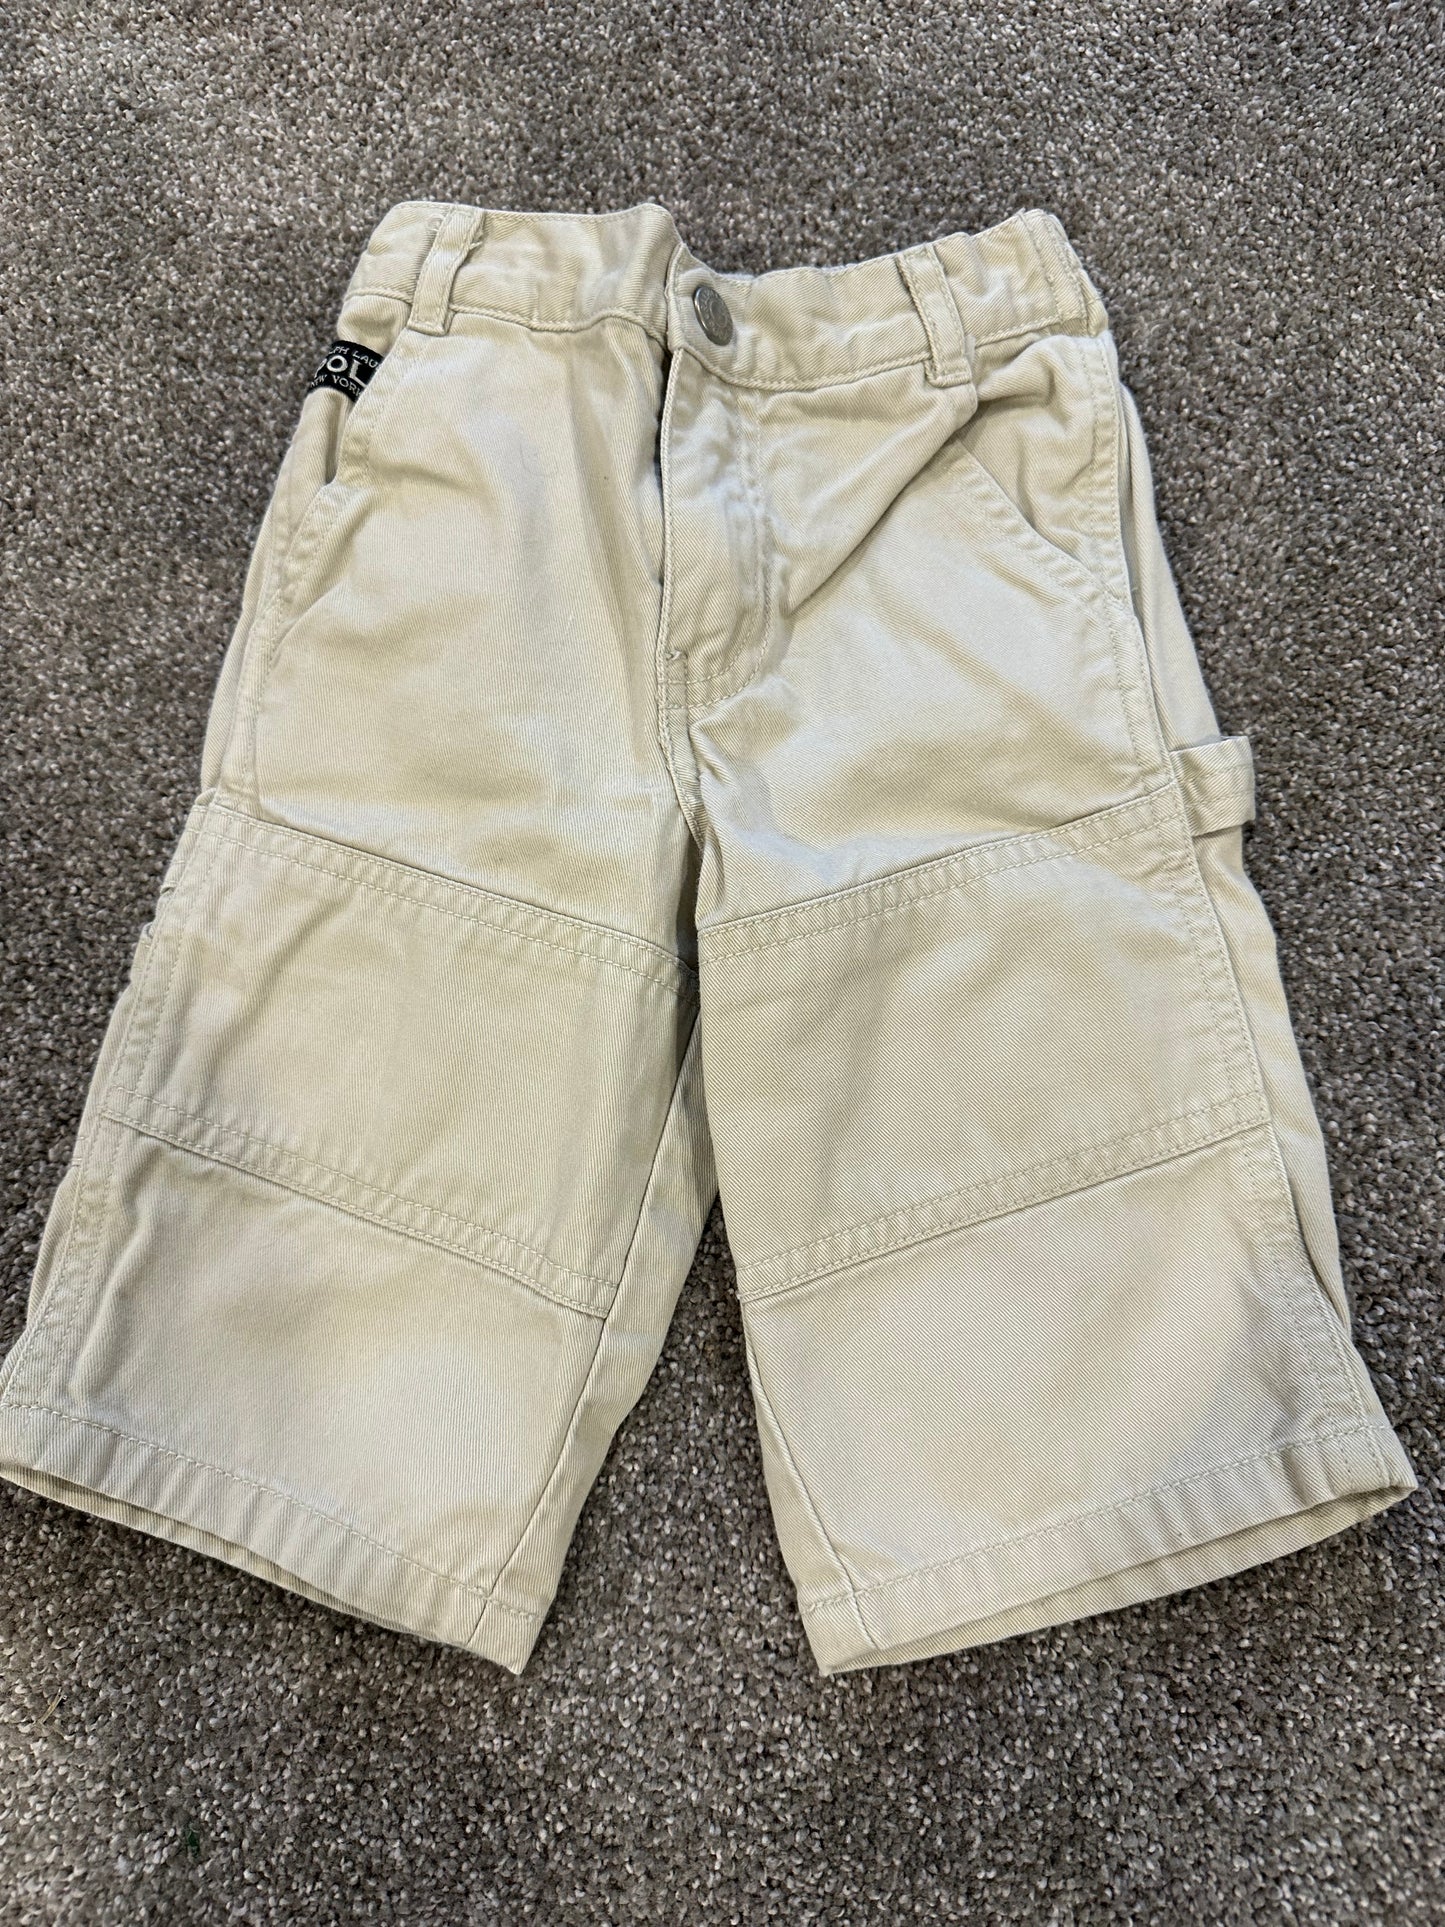 Ralph Lauren 3-6 months Boys Khaki Pants